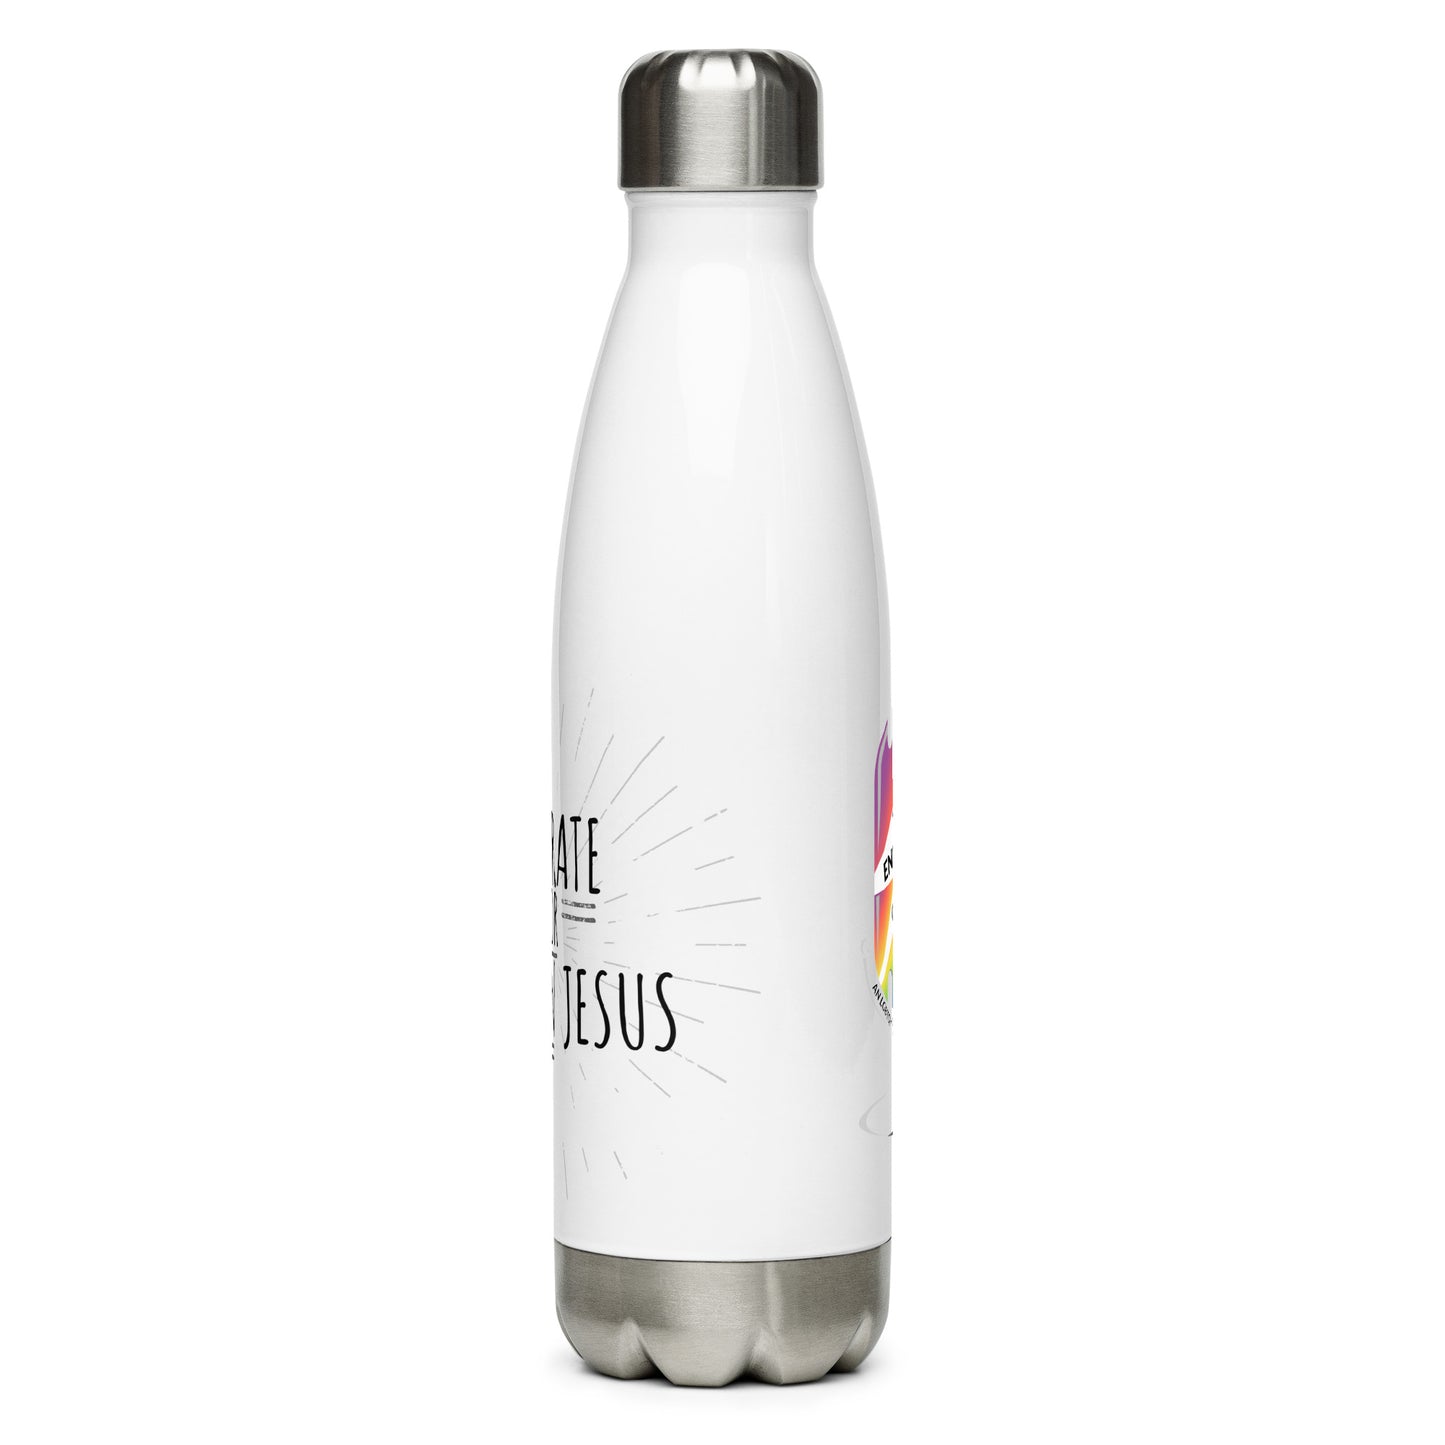 Hydrate For Lesbian Jesus Stainless Steel Water Bottle